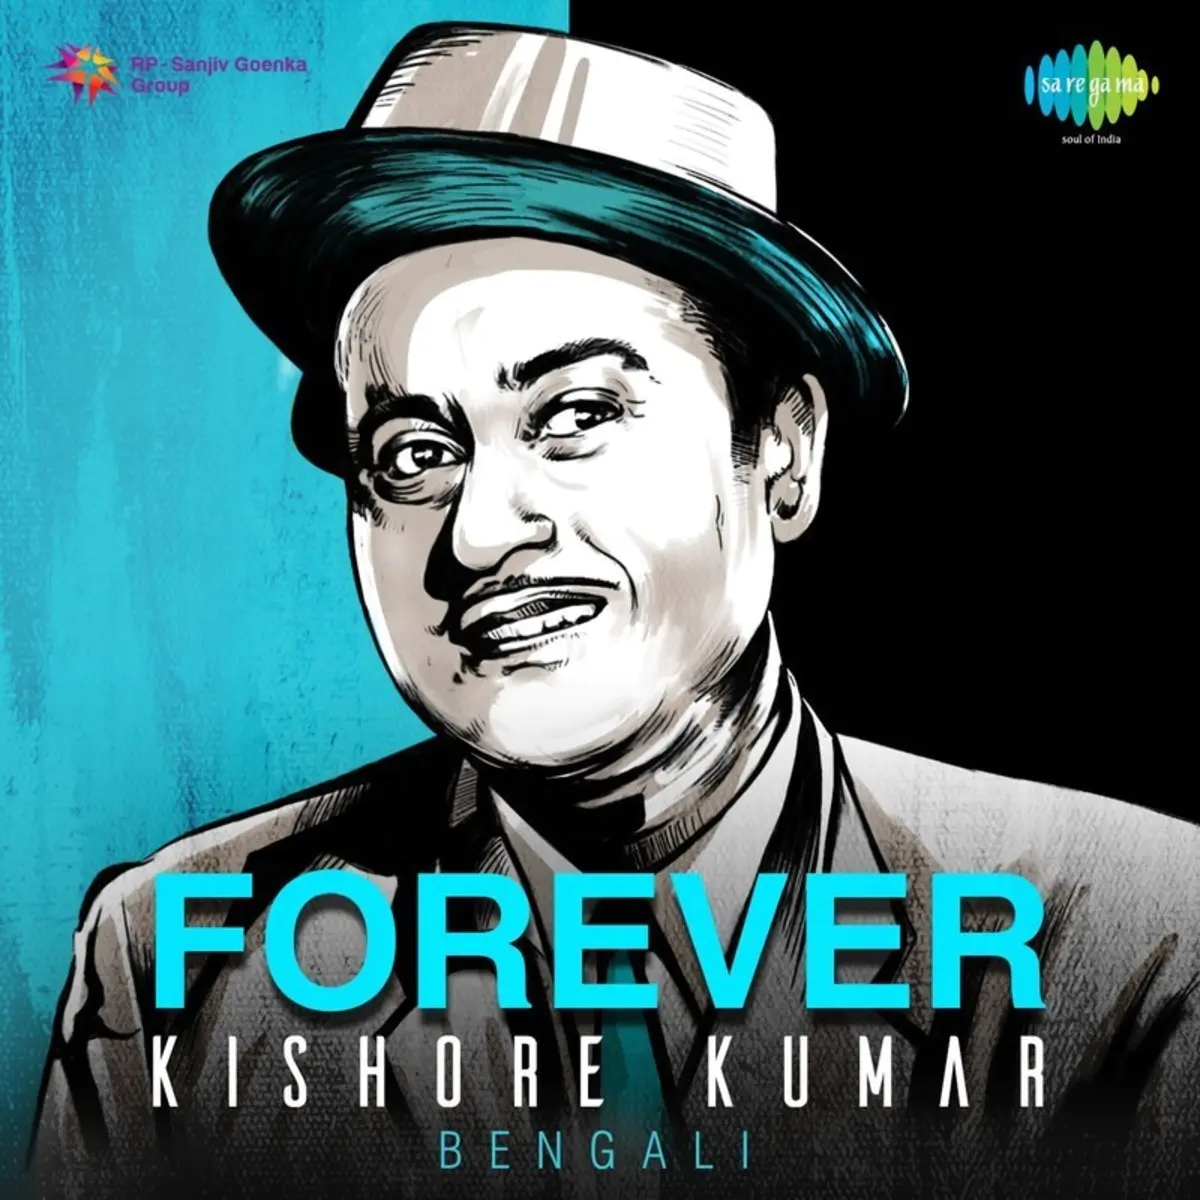 Kumar download free songs zip songs file bengali mp3 kishore Kishore Kumar